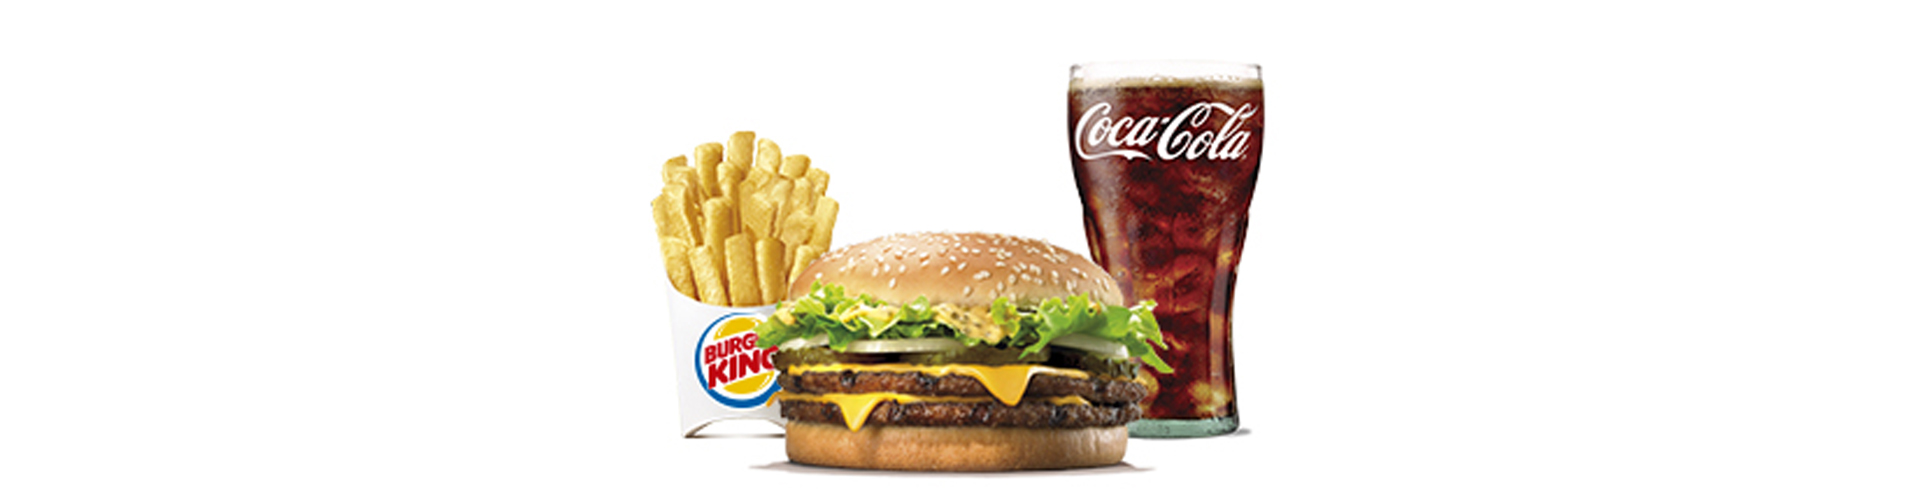 burgerking-40001712-sprite-ensalada